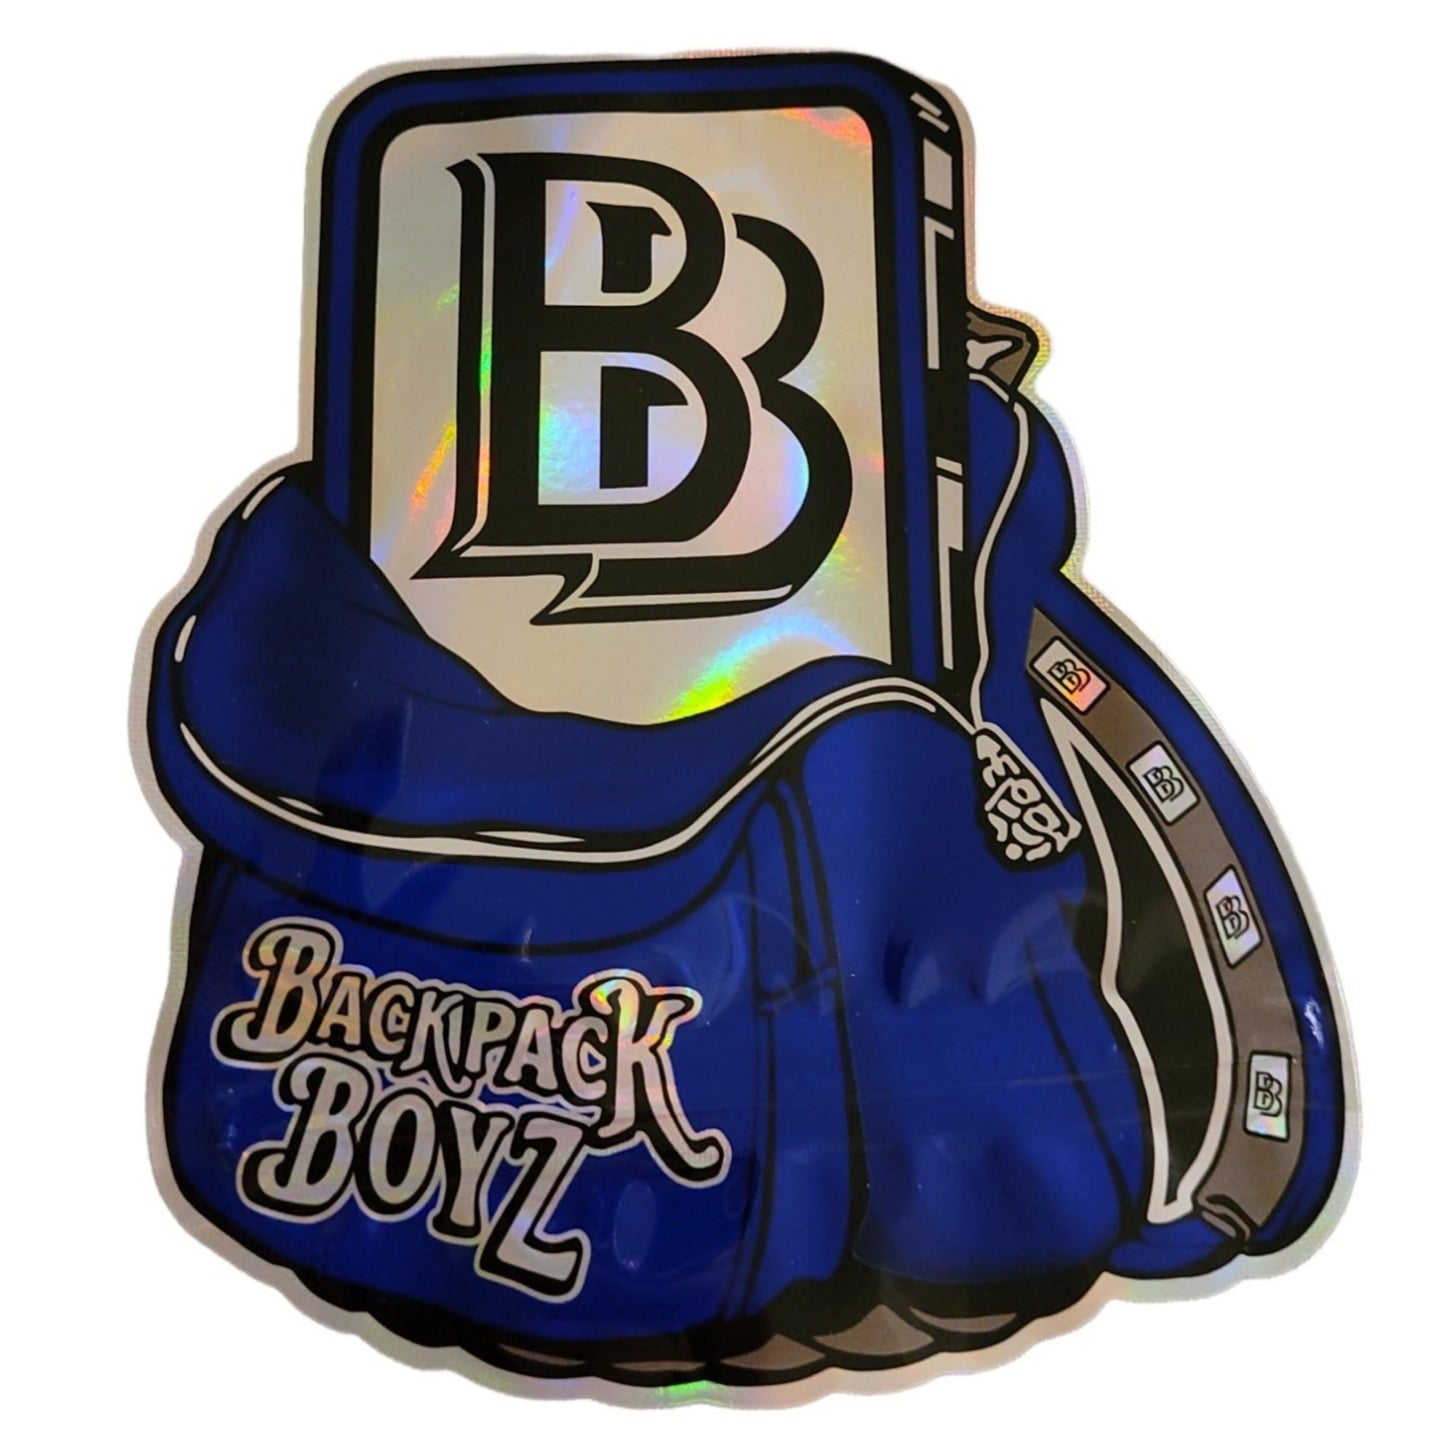 Blue BackPack Boyz  3.5G Mylar Bags